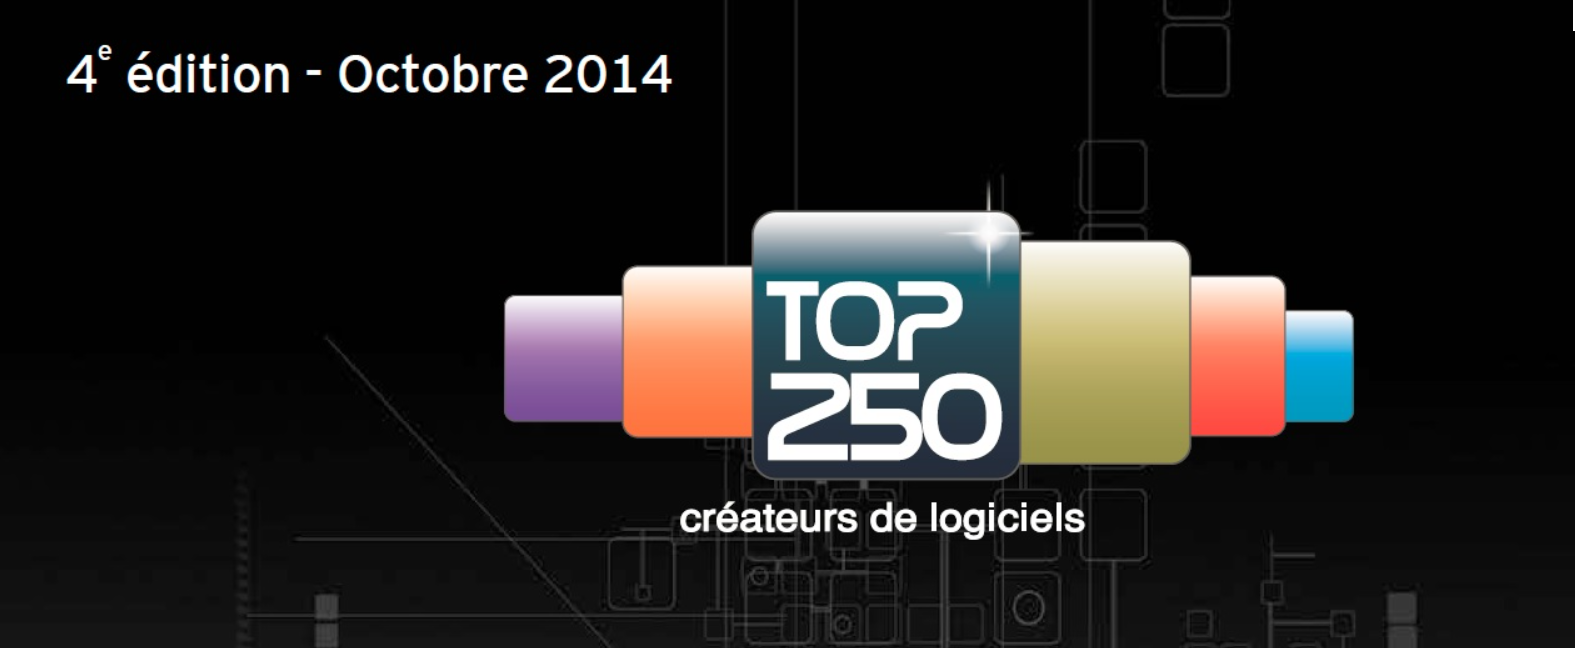 Top 250 EY 2014